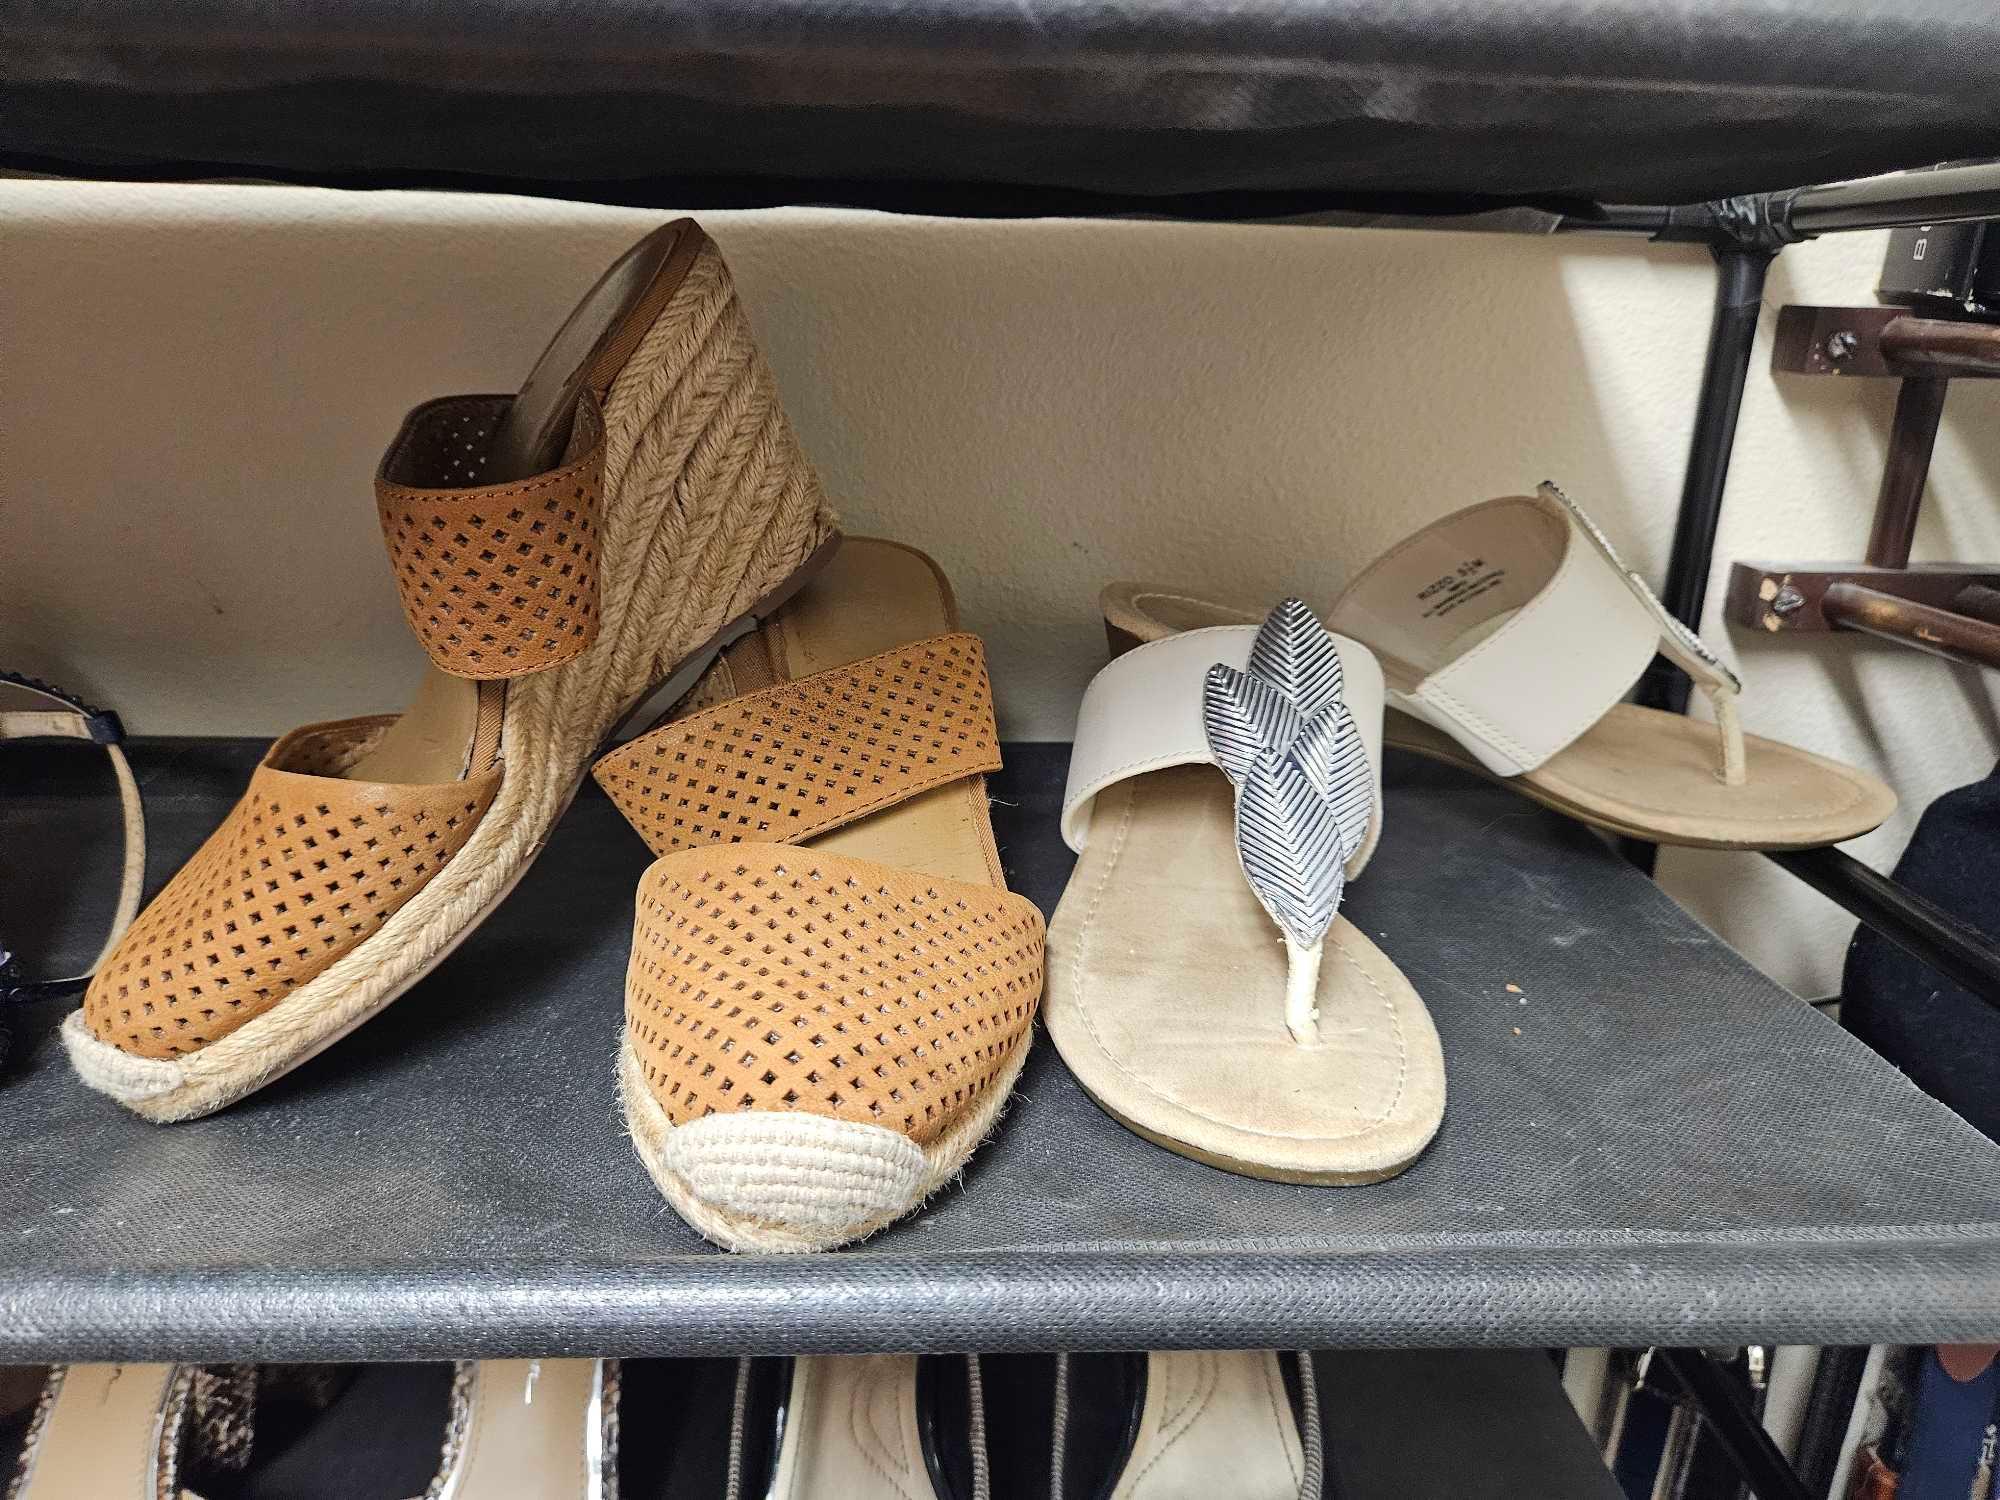 (3) shelves of Ladies Shoes heels, Jessica Simpson, Life stride, Tahari, Impo